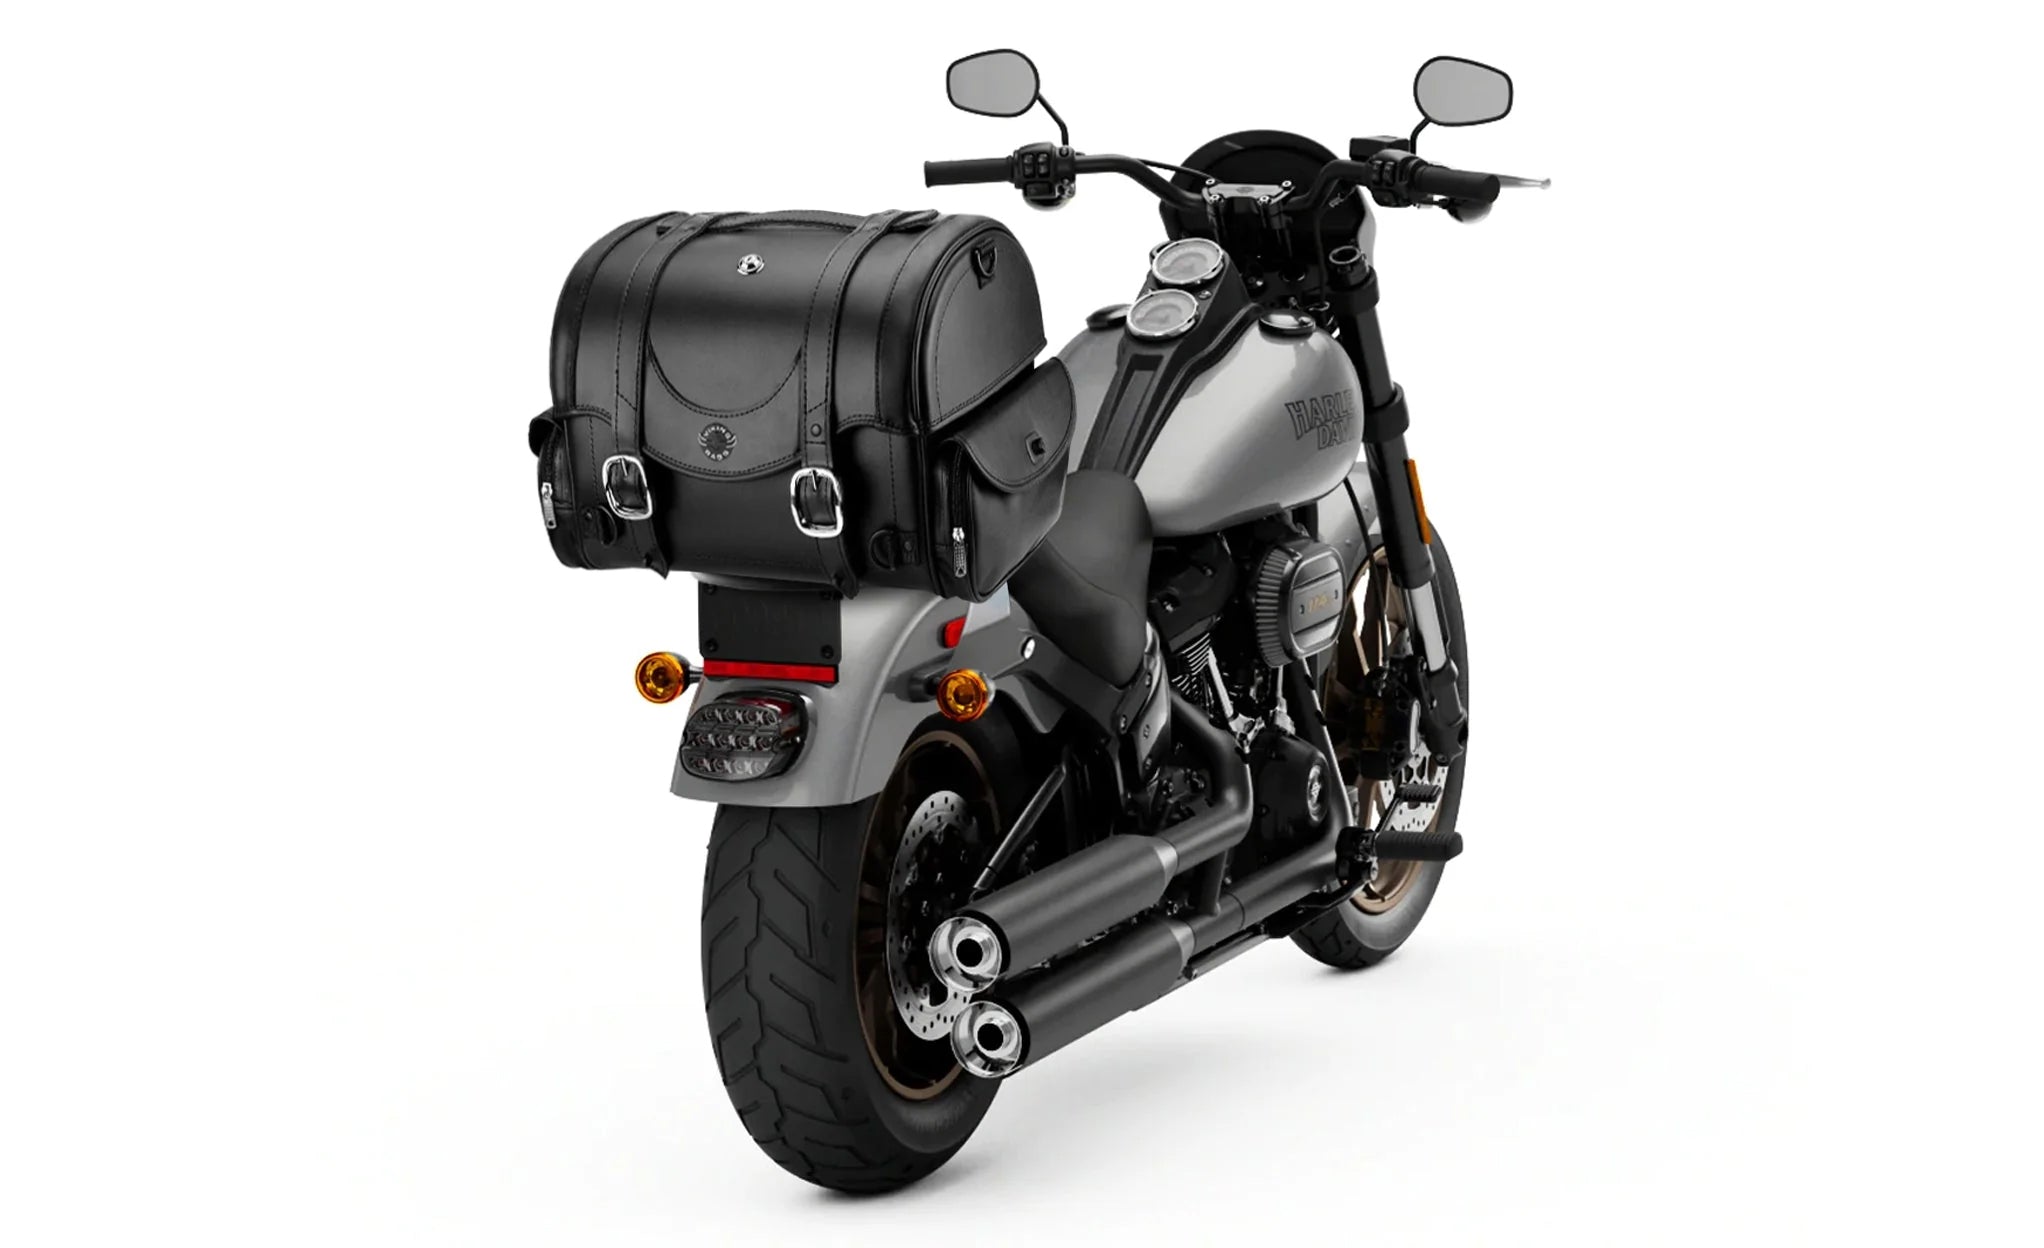 21L - Century Medium Honda Leather Motorcycle Roll Bag on Bike Photo @expand